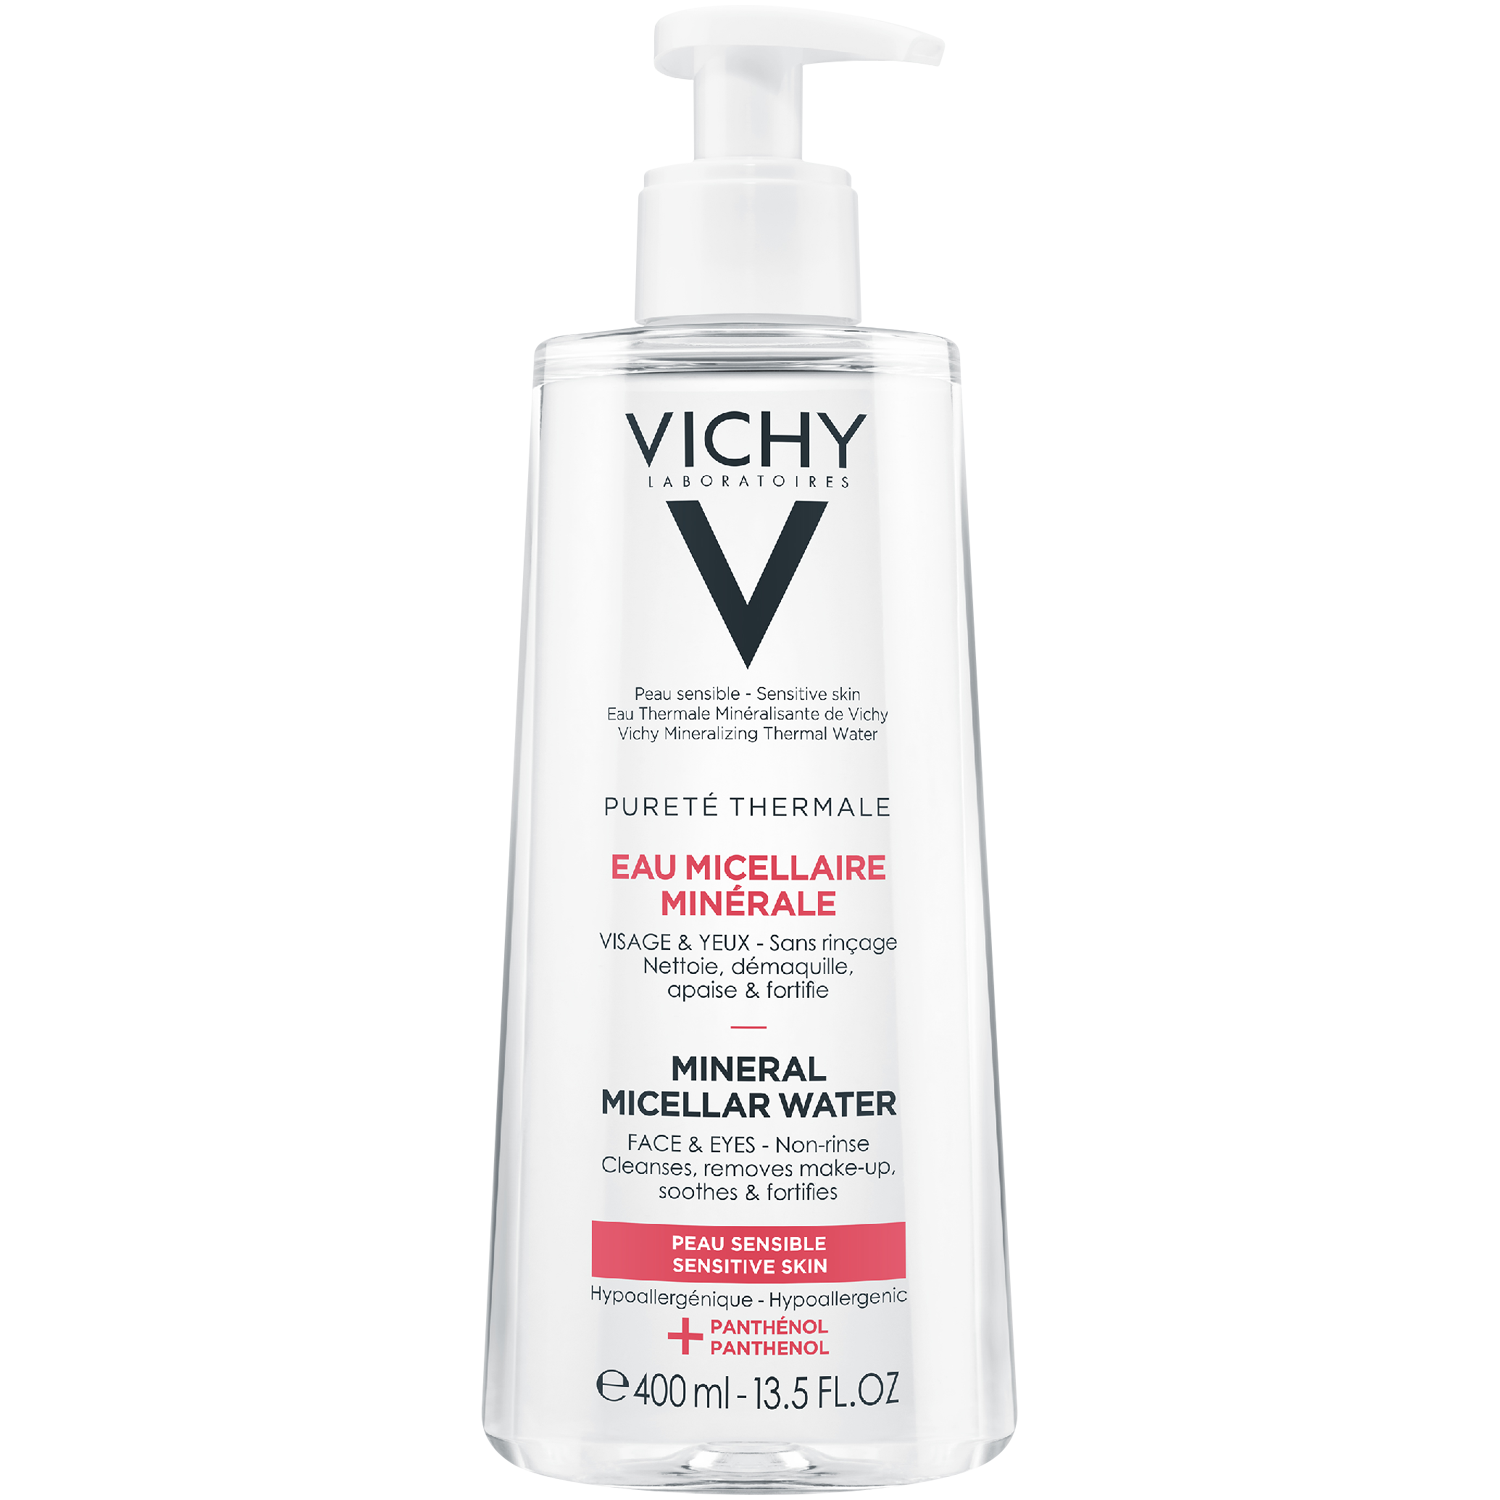 Vichy Purete Thermale мицеллярная вода для чувствительной кожи, 400 мл vichy мицеллярная вода универсальная для чувствительной кожи лица и вокруг глаз 400 мл vichy purete thermal